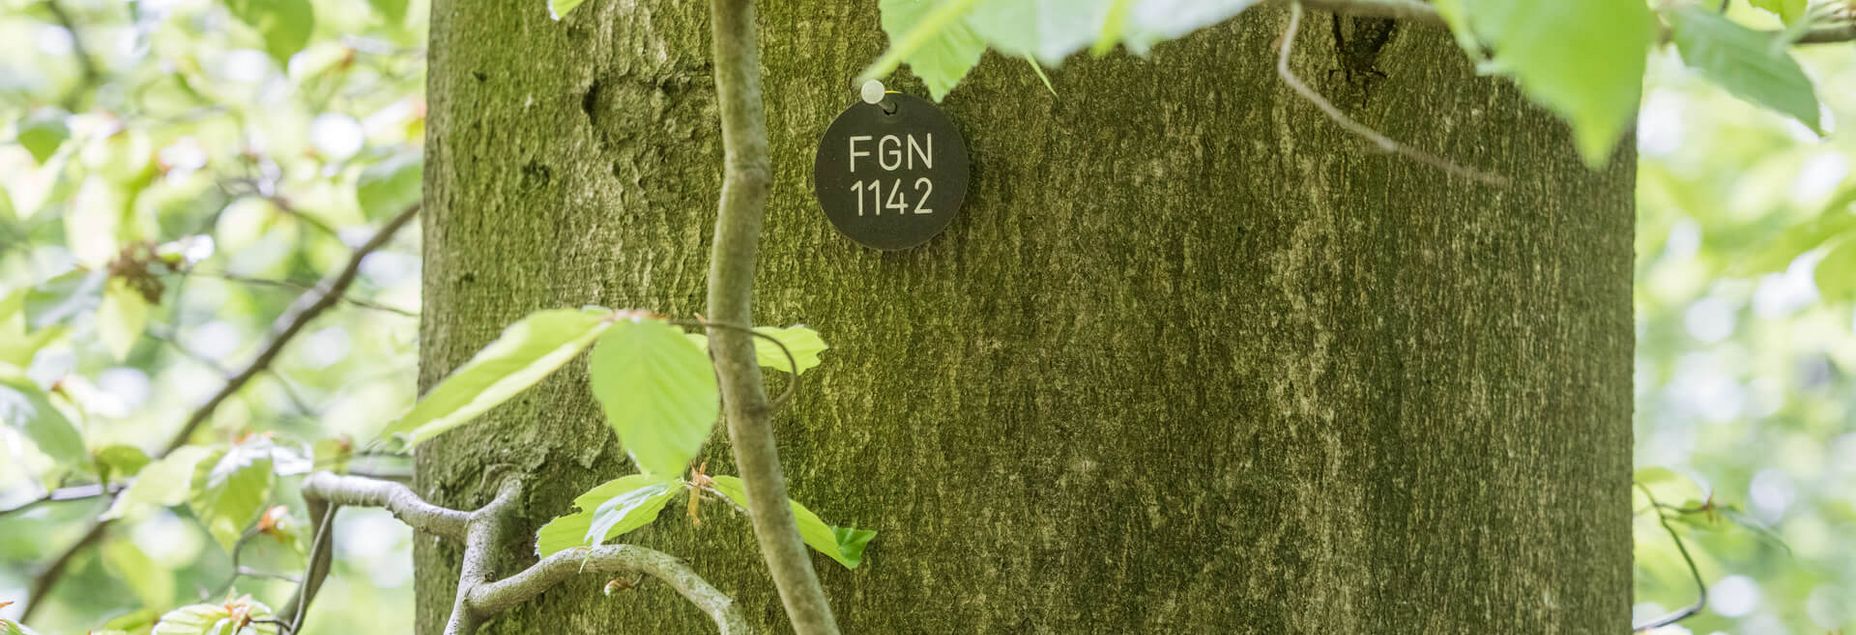 Baum FGN 1142 - Plakette